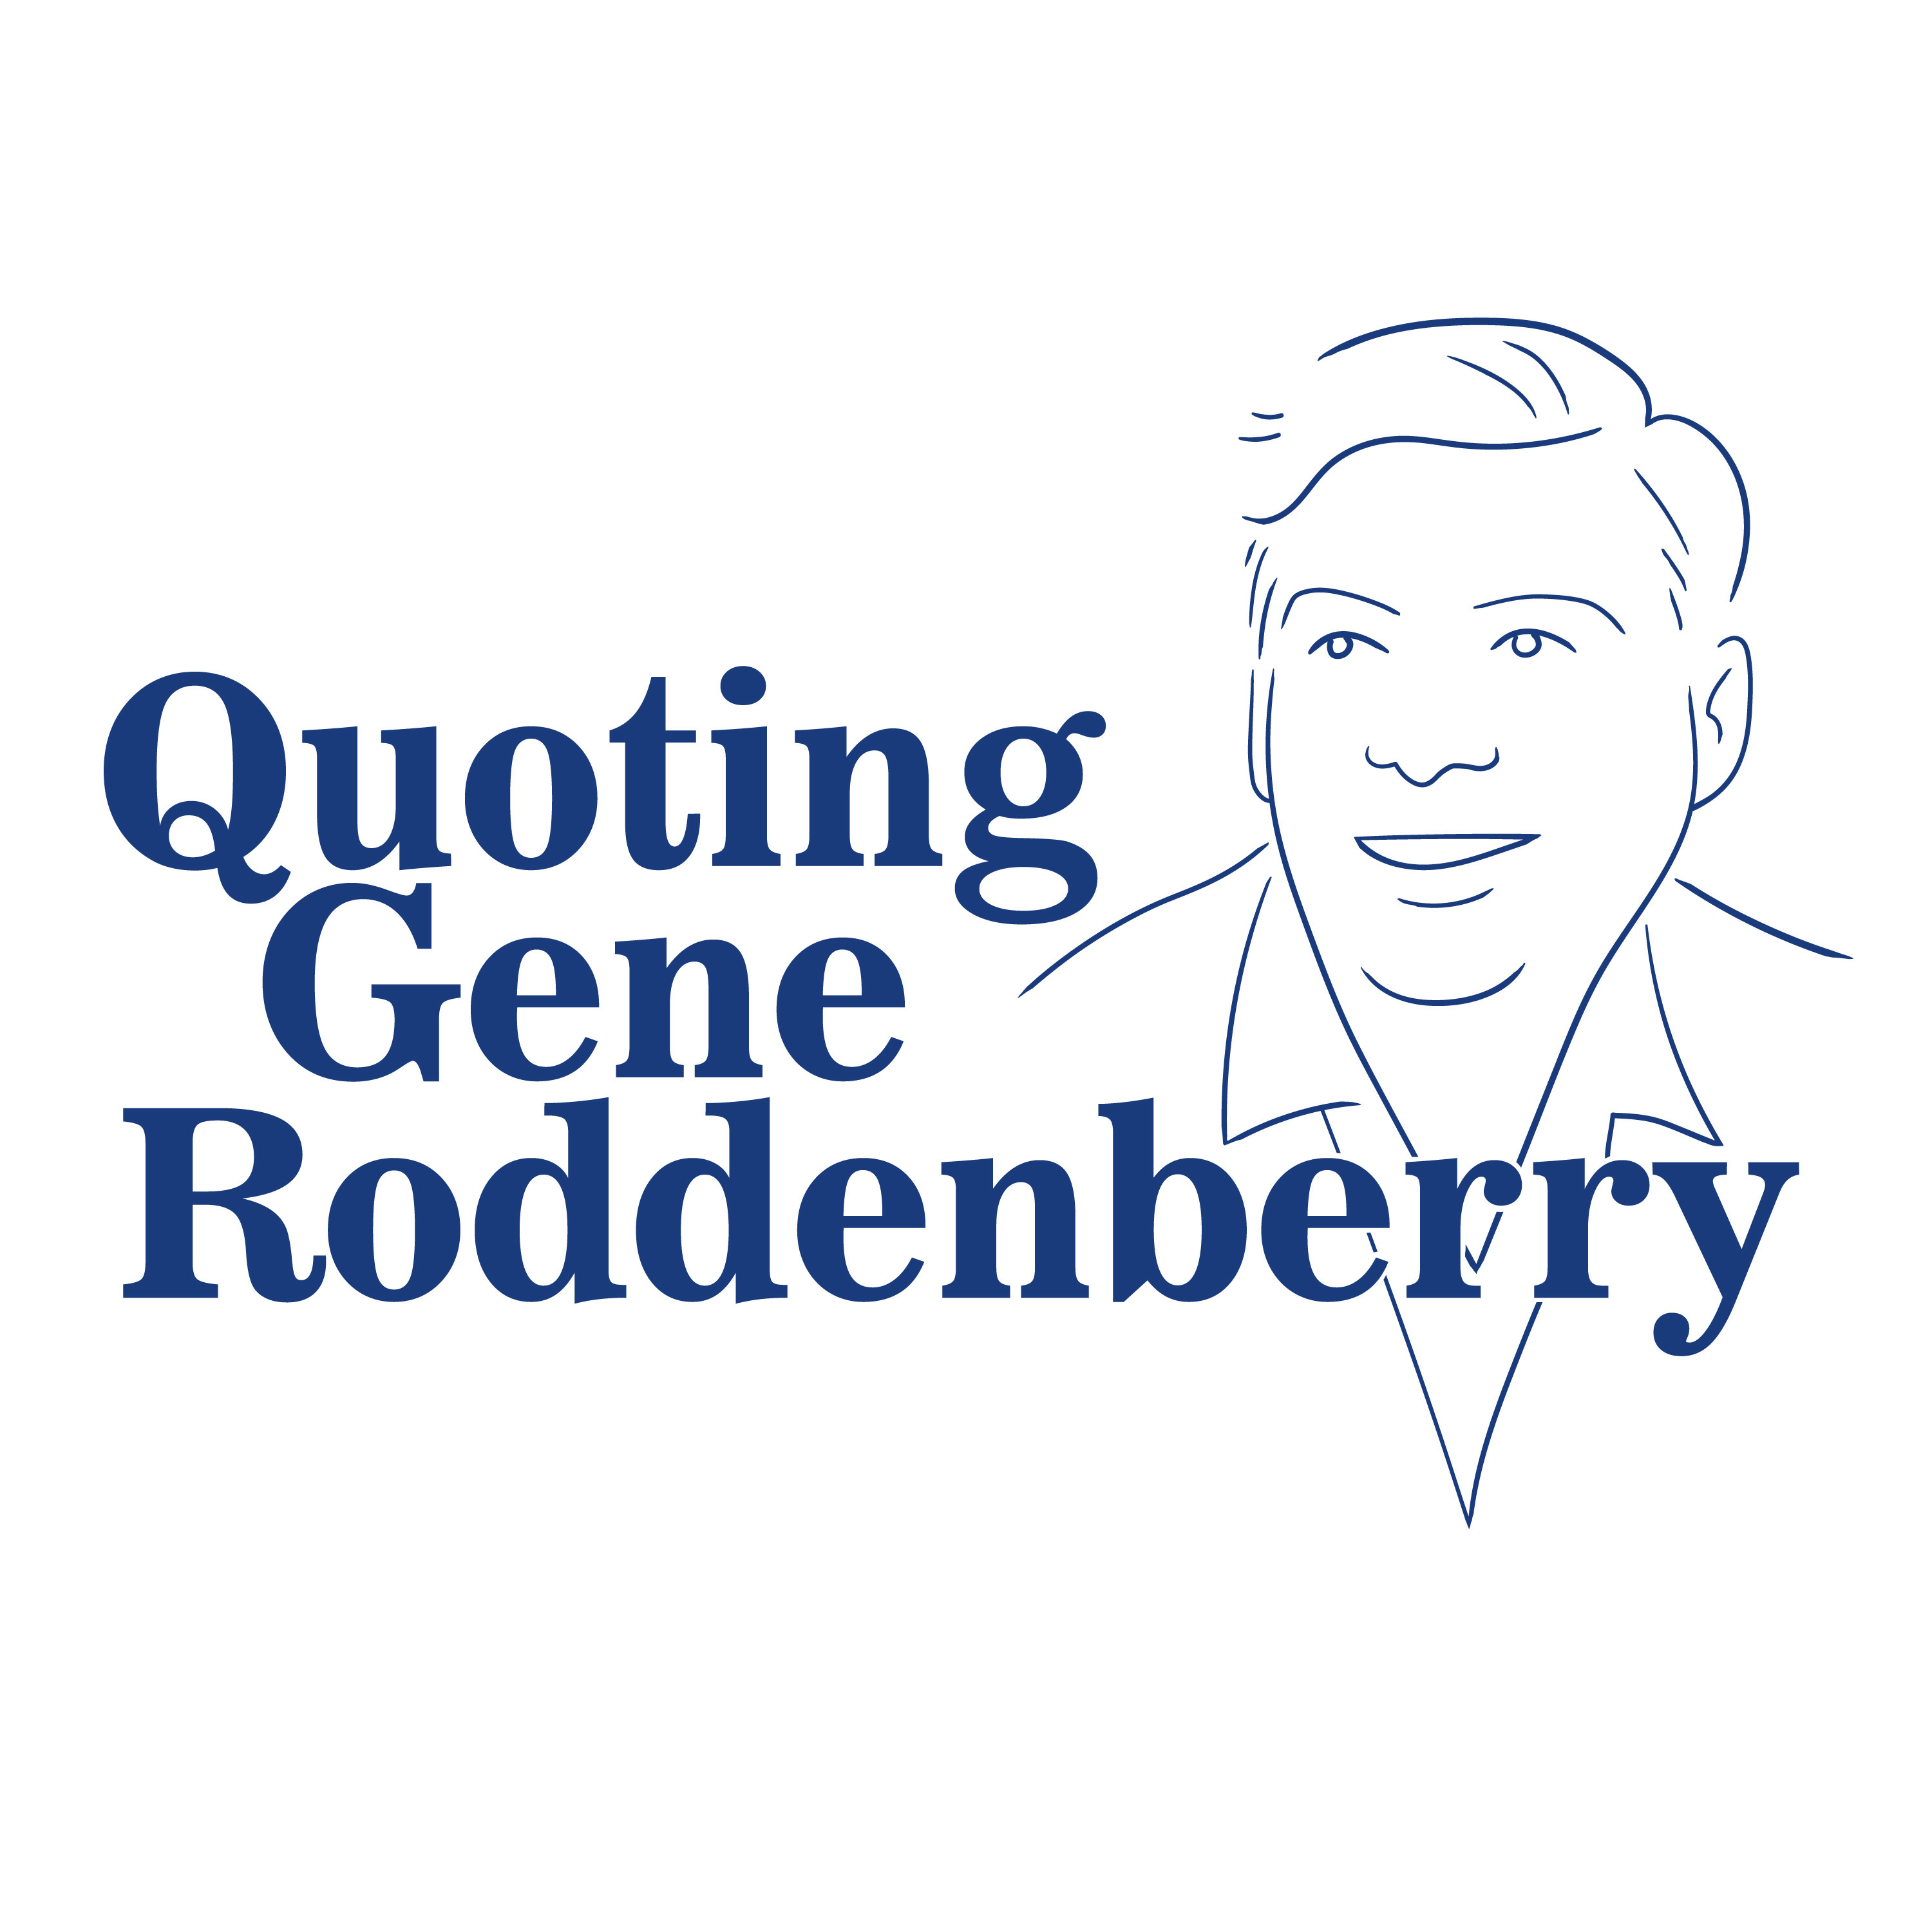 Quoting Gene Roddenberry